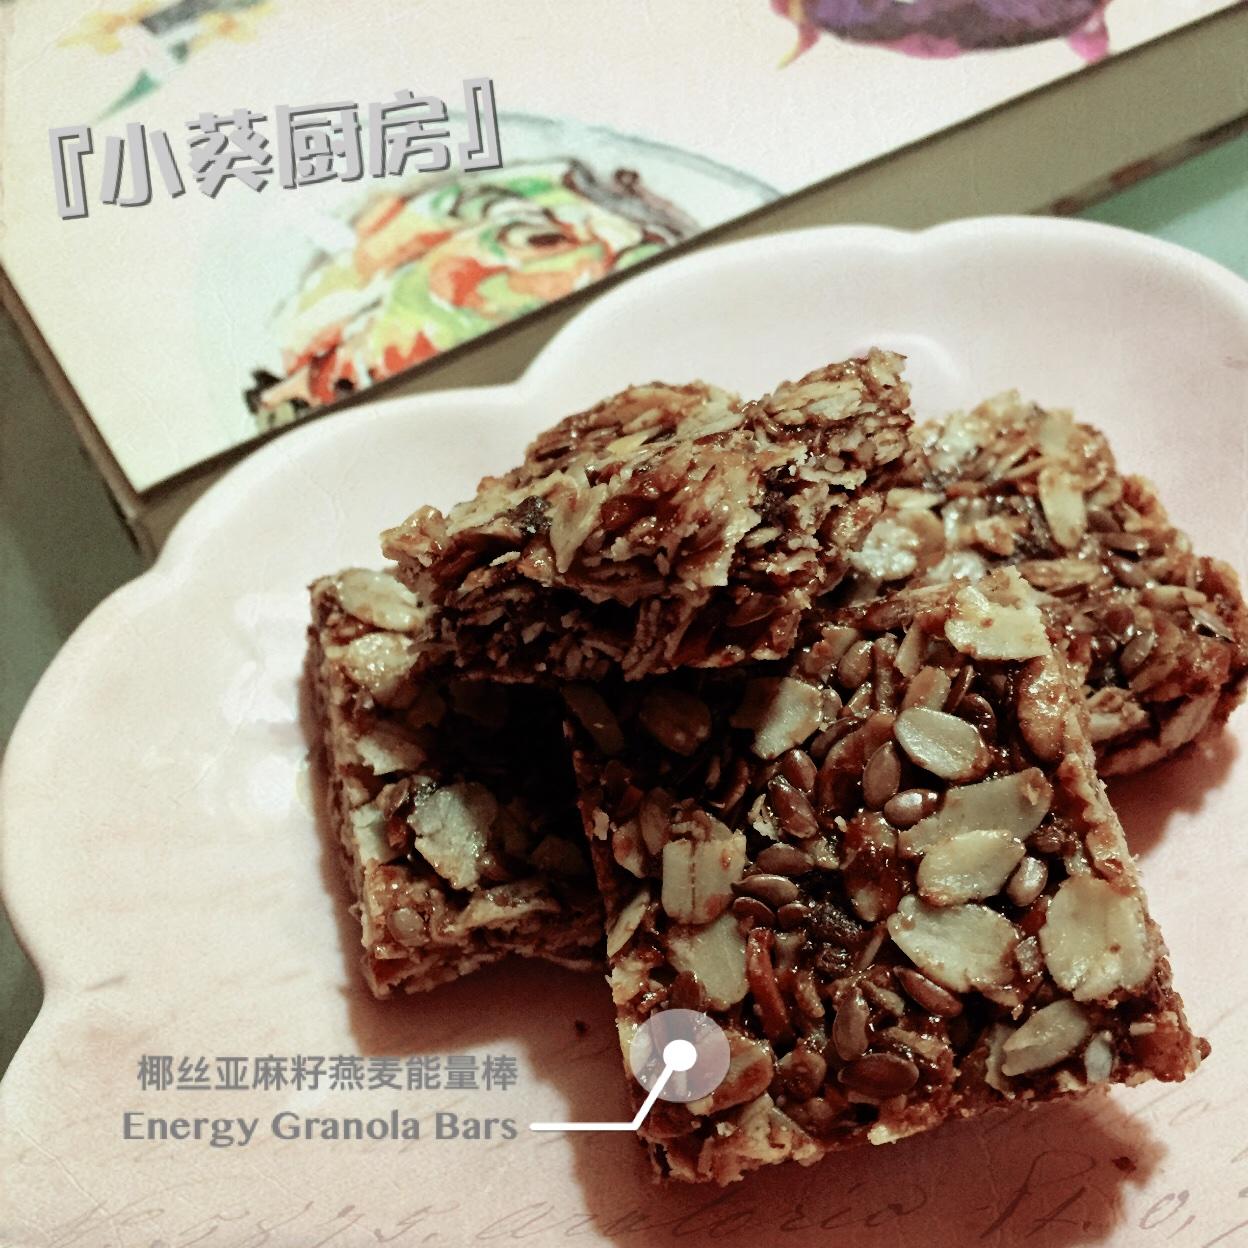 『小葵厨房』
椰丝亚麻籽燕麦能量棒 
Energy Granola bar  
(Coconut Chip Flaxseed)的做法